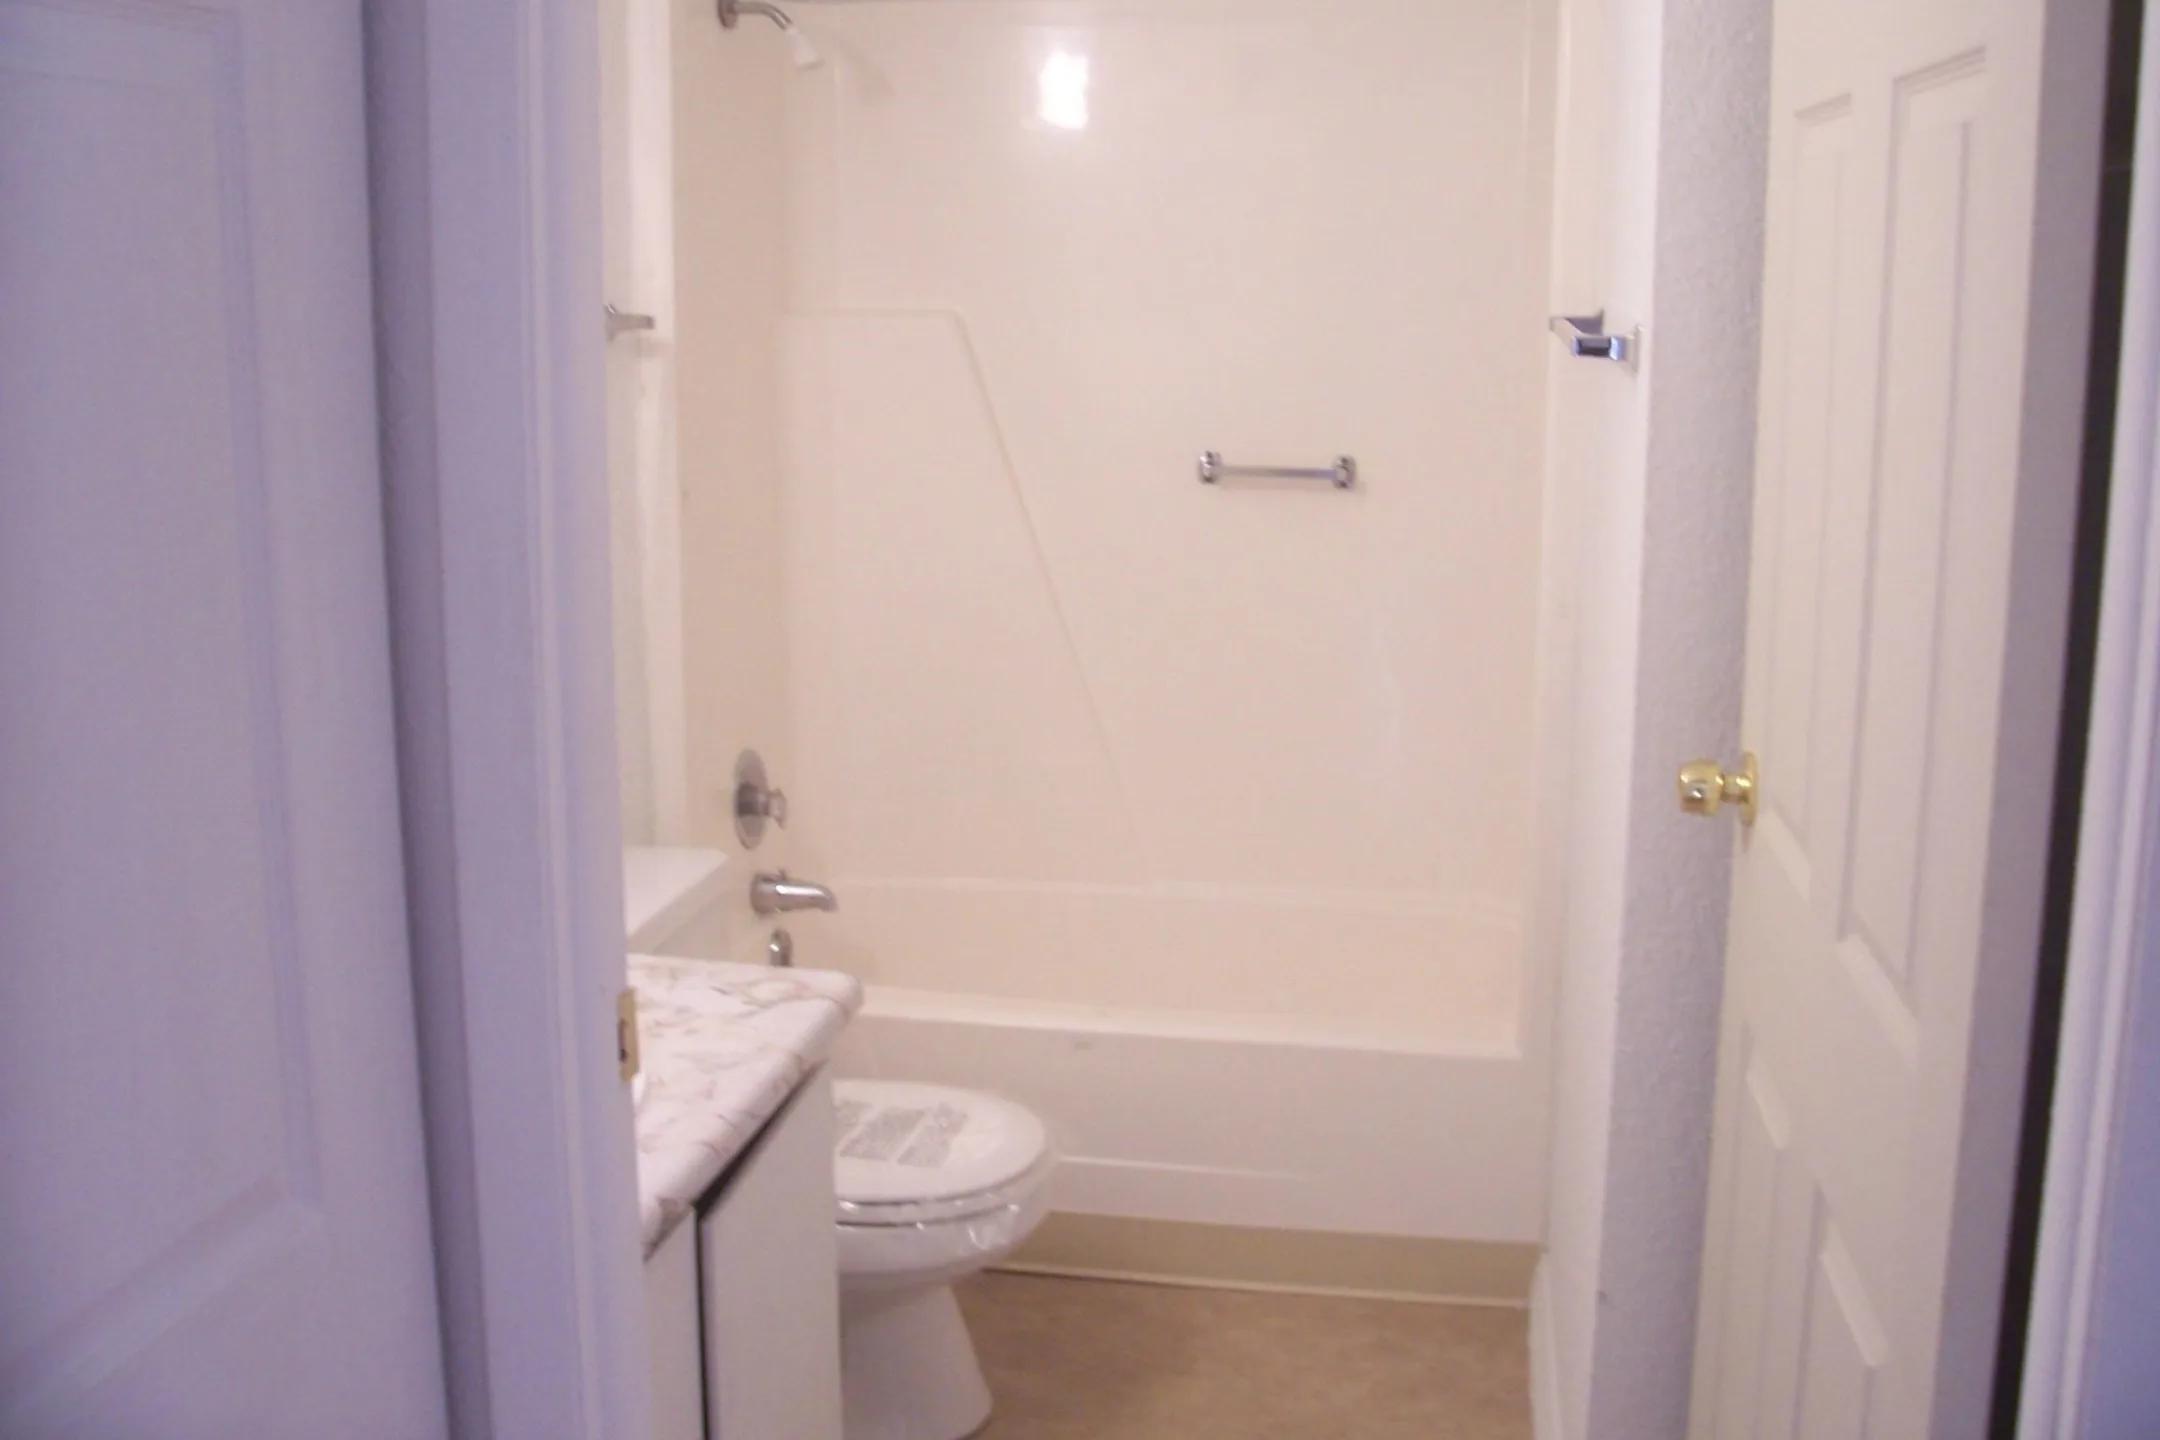 Bathroom - Curiosity Creek Apartments - Tampa, FL